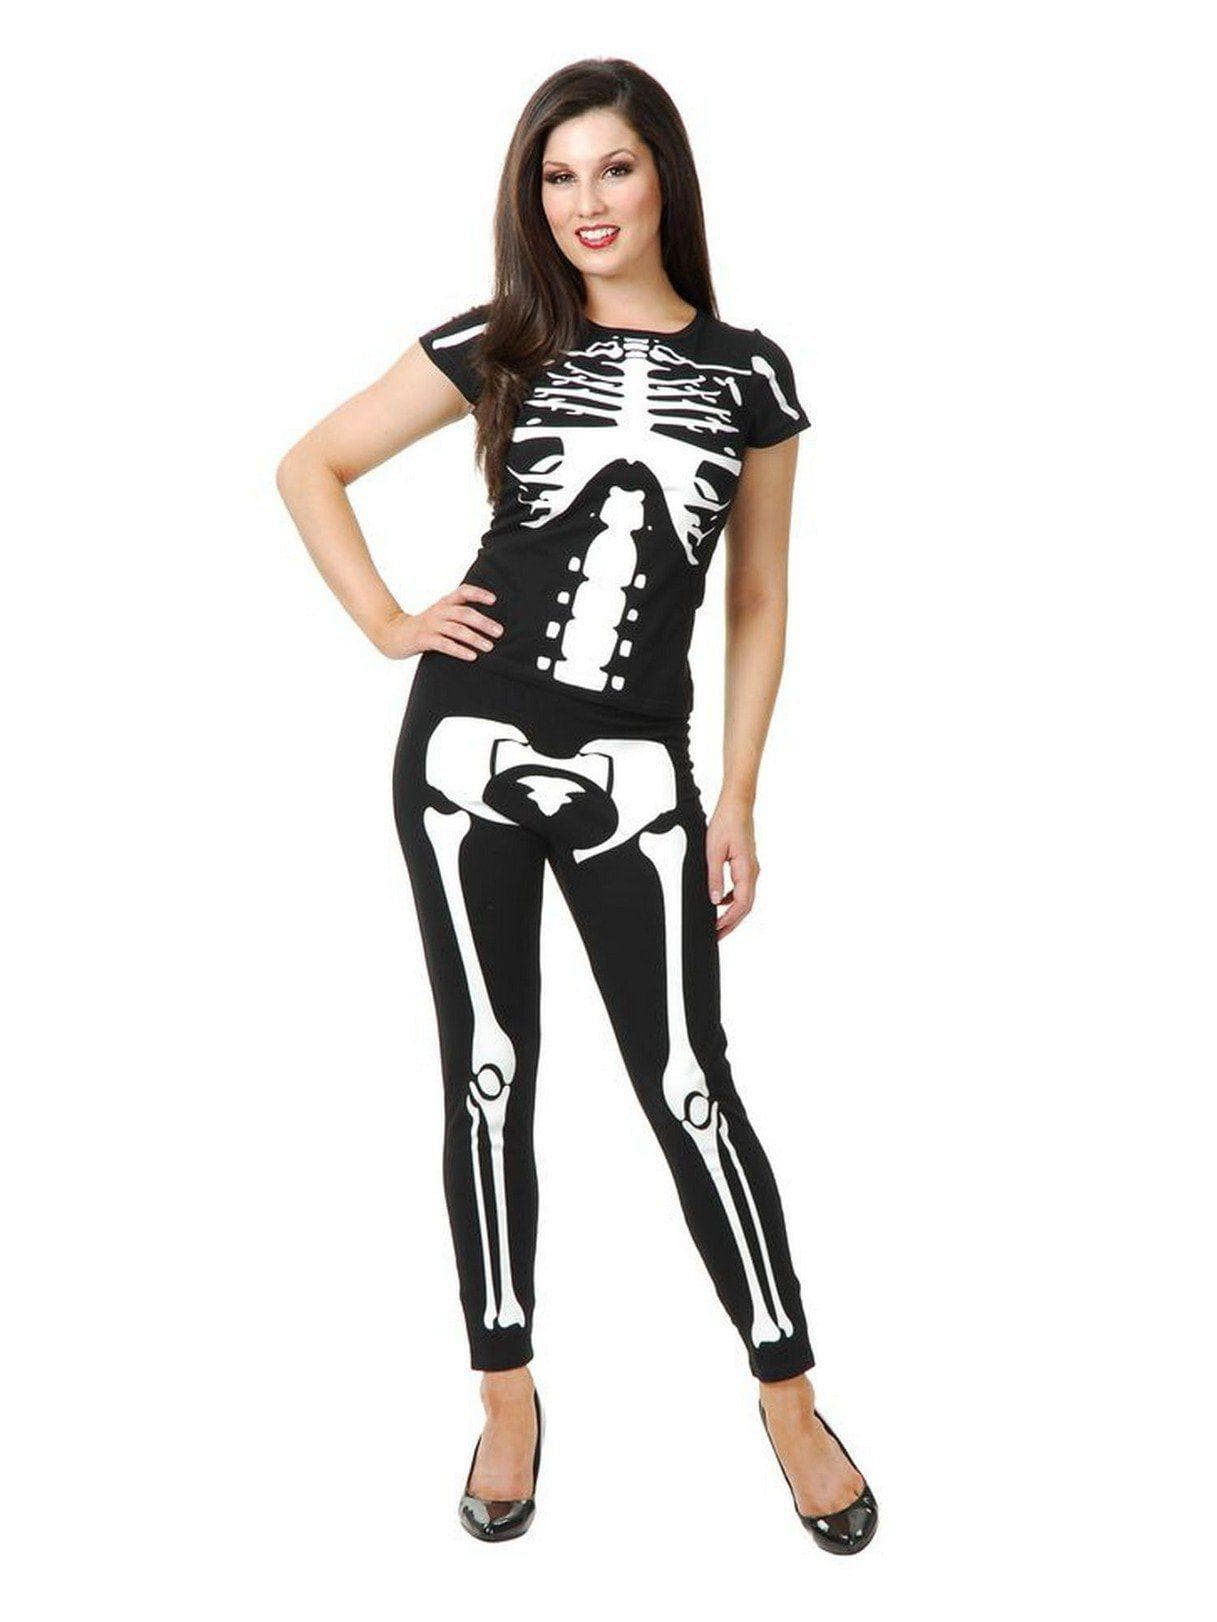 Adult Skeleton Costume - costumes.com